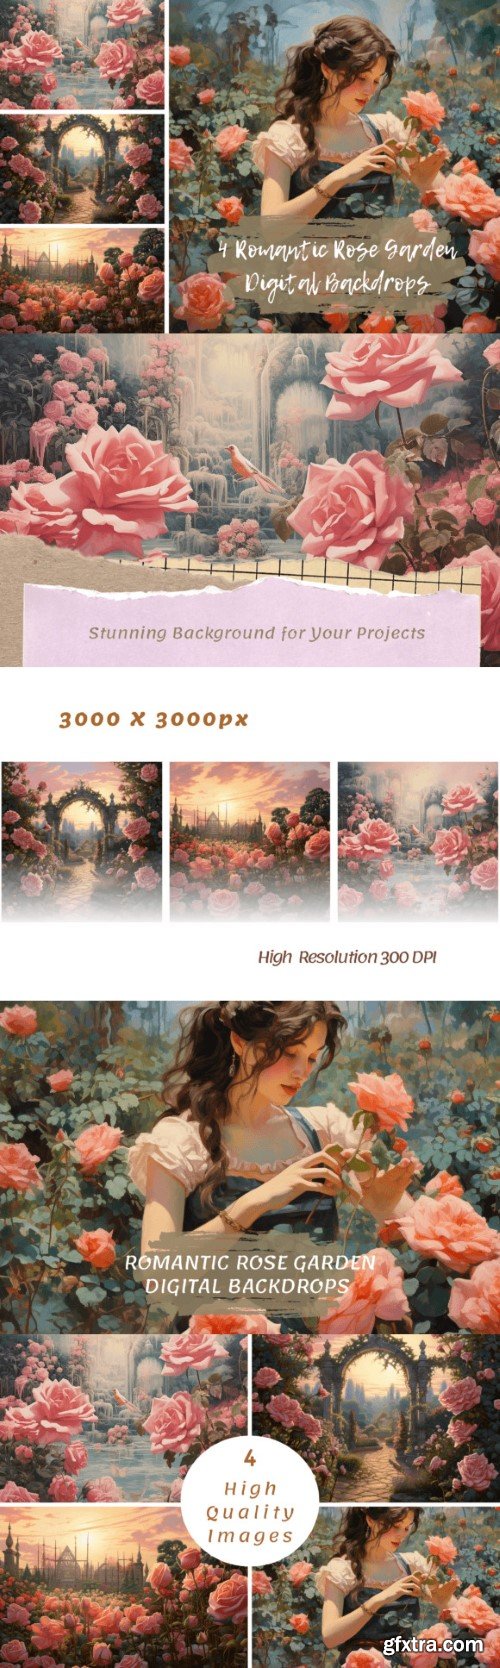 Romantic Rose Garden Digital Backdrops